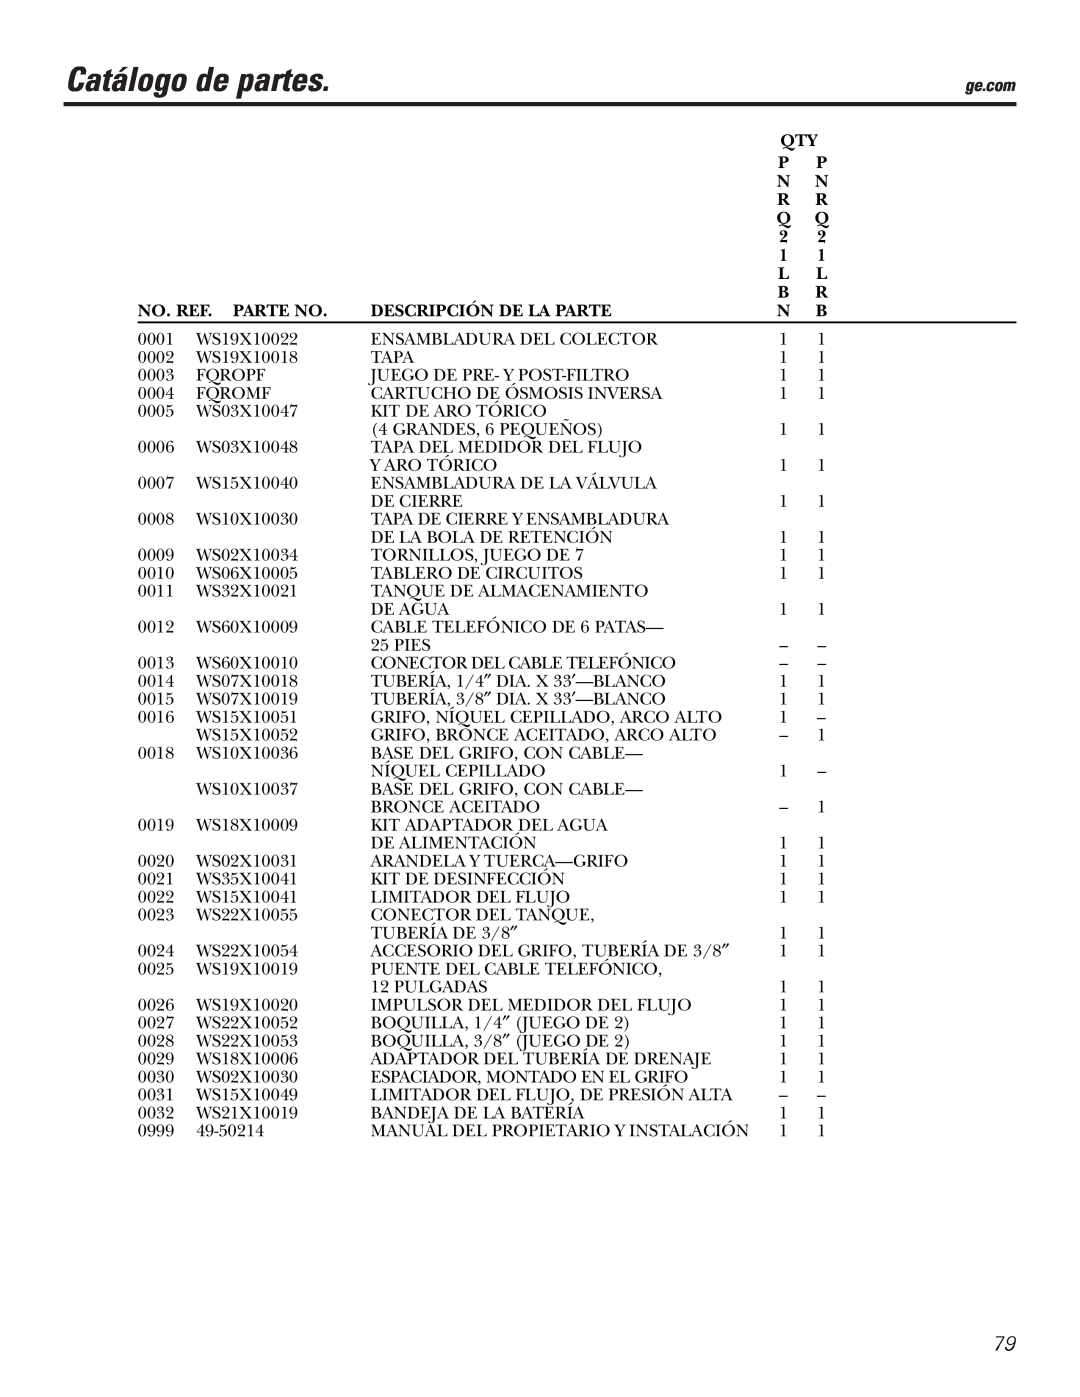 GE PNRQ21LRB, PNRQ21LBN owner manual Catálogo de partes 